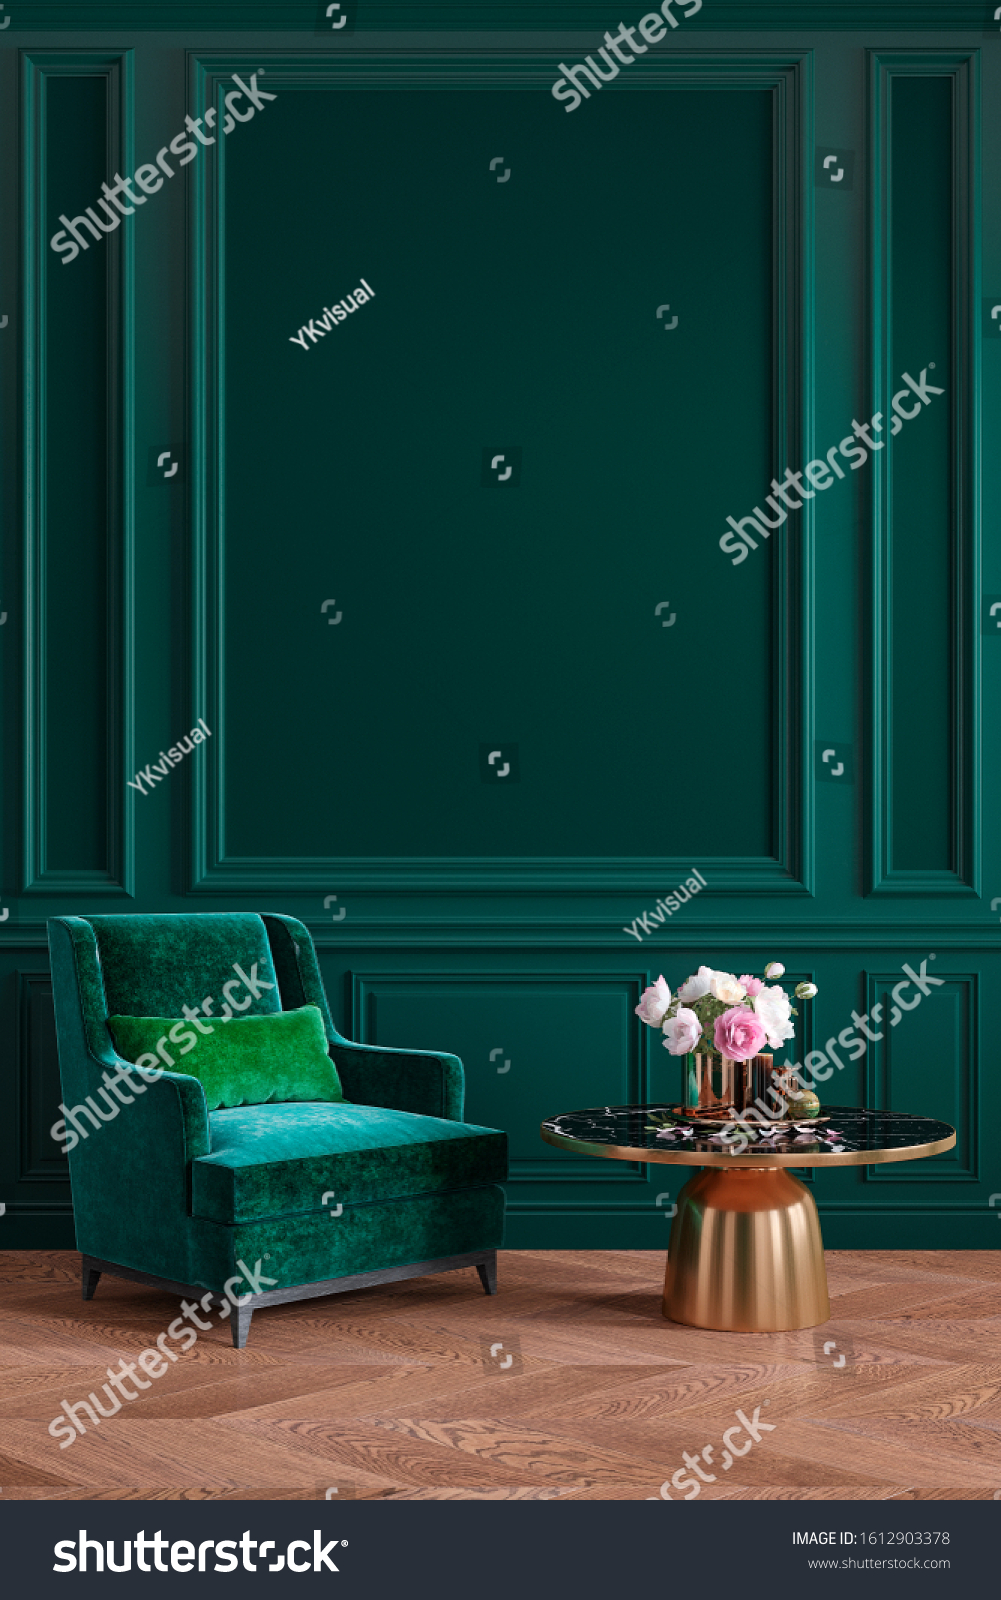 Classic Green Interior Armchair Coffee Table Stock Illustration ...